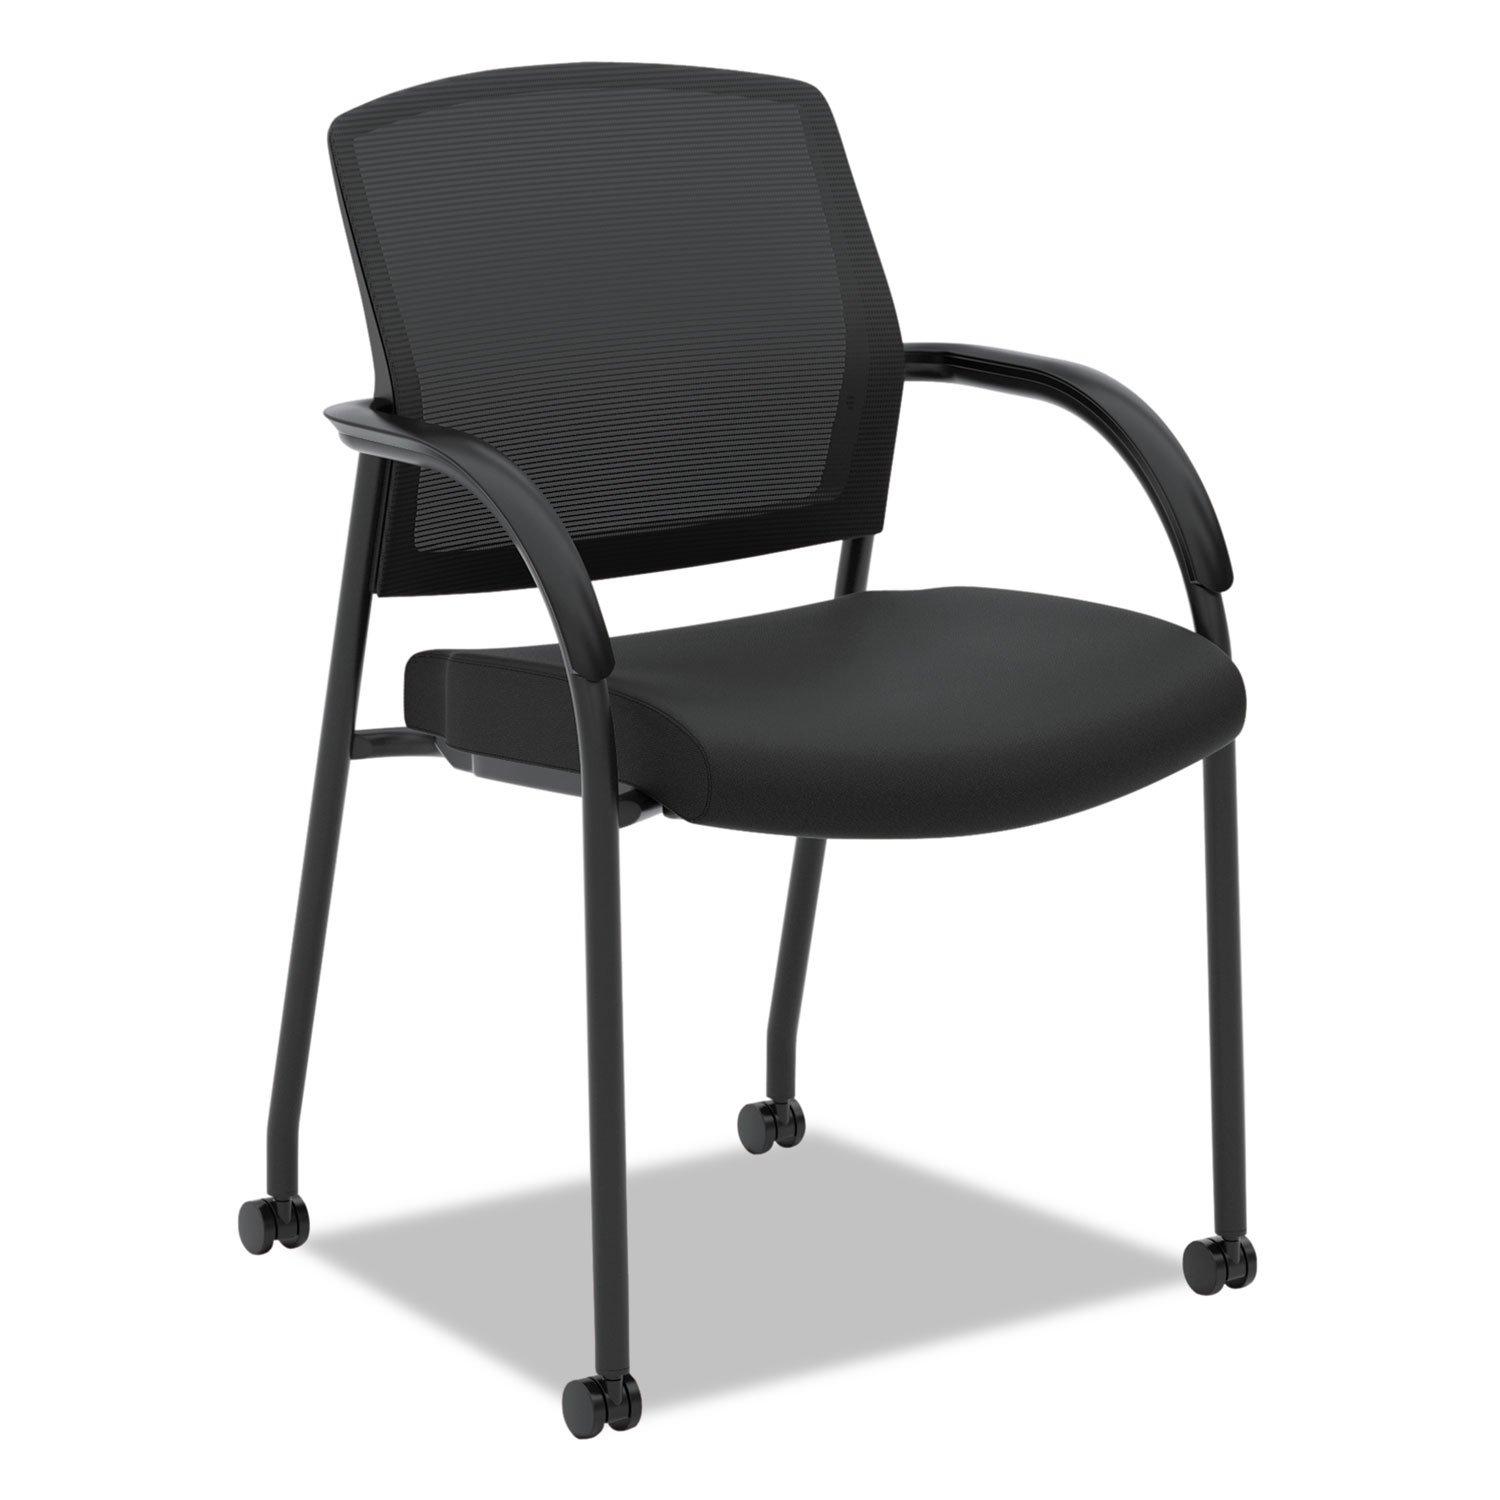  HON H2285.VA10.T Lota Series Guest Side Chair, 23 x 24.75 x 34.5, Black Seat/Black Back, Black Base (HON2285VA10) 